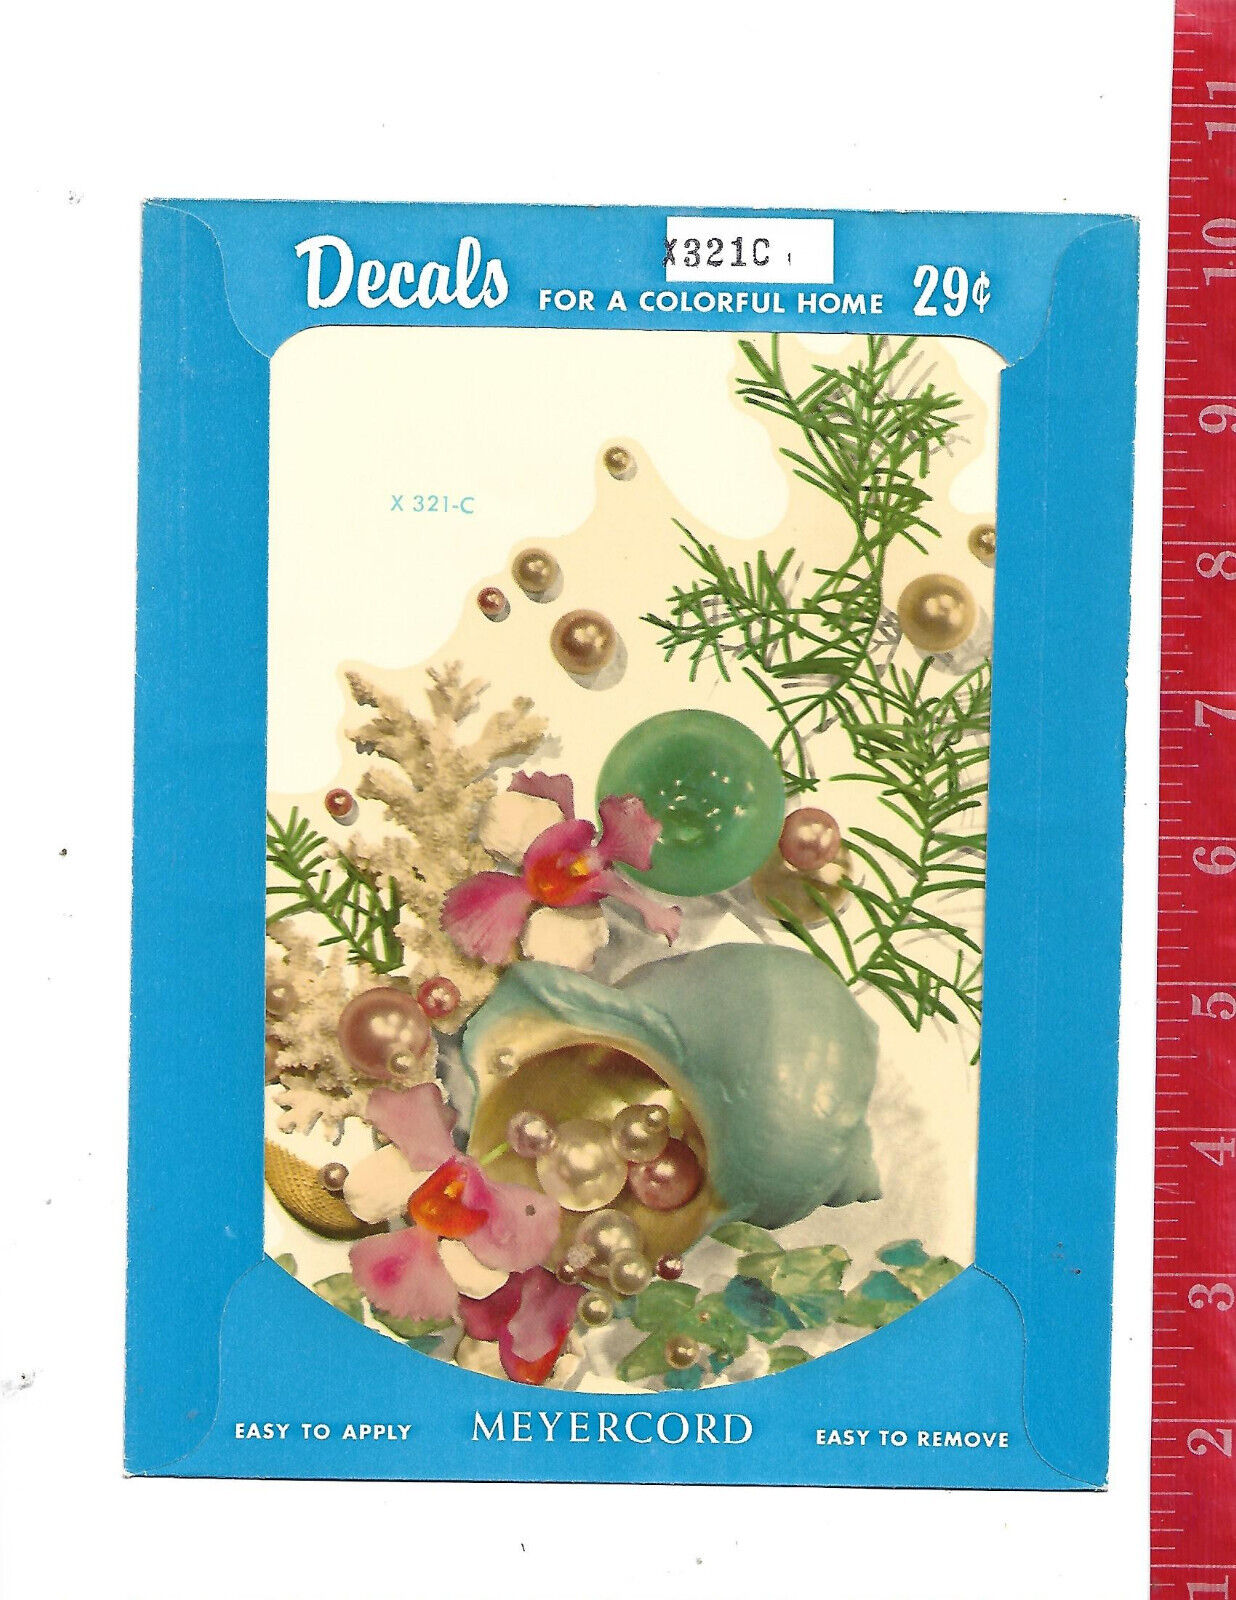 Vintage Meyercord decorator water decal x321c